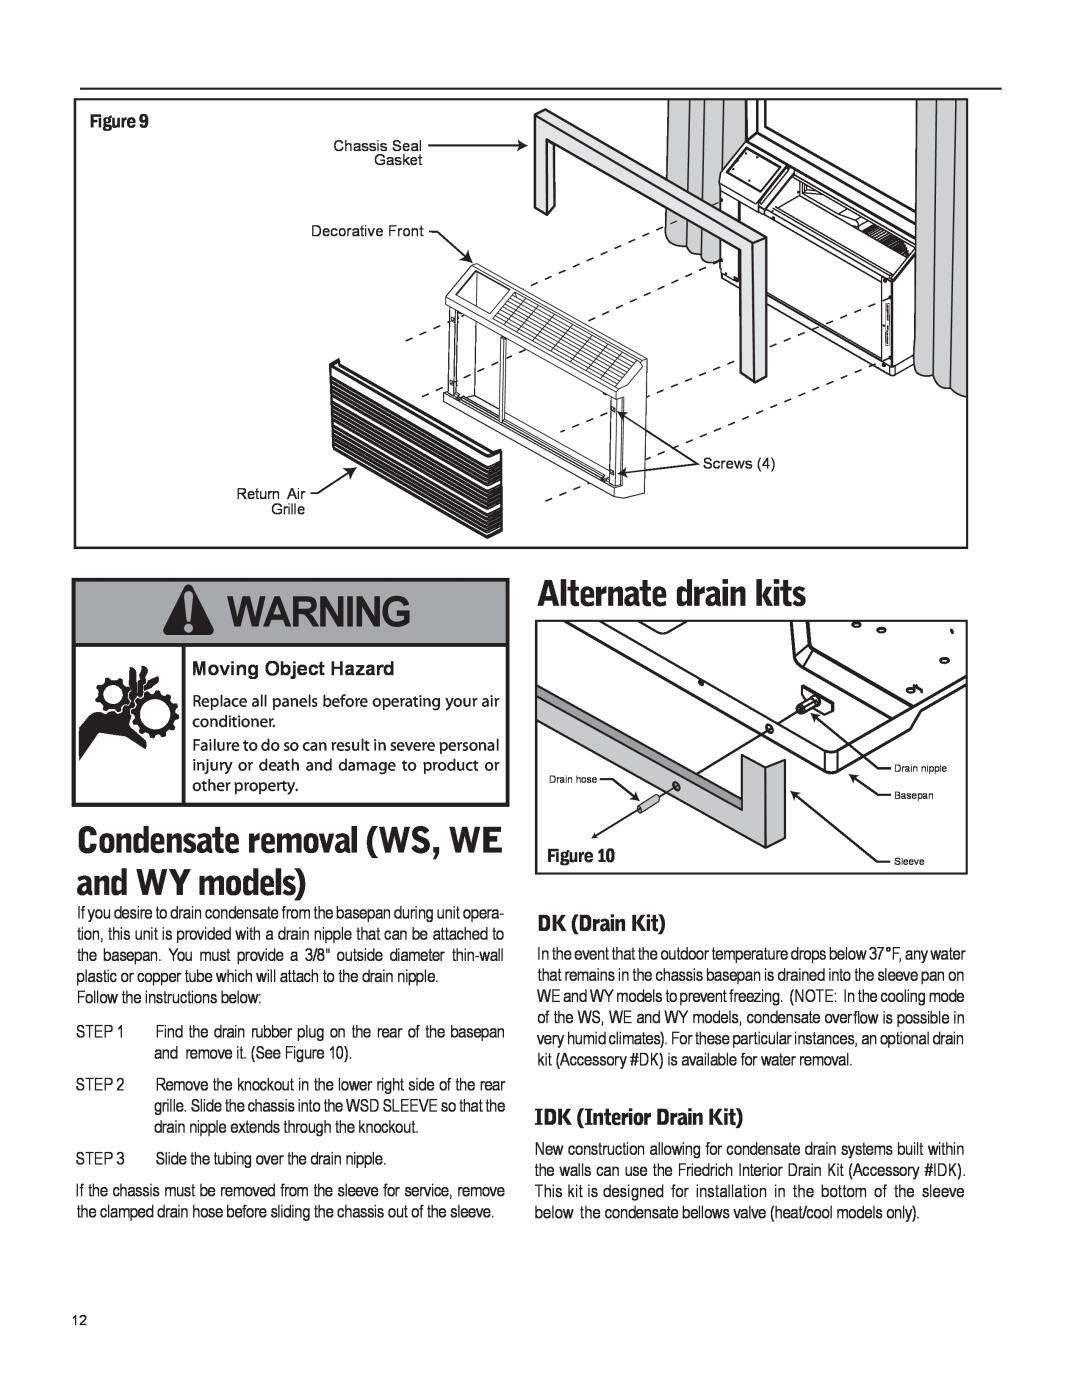 Friedrich WY09, WE15, WY12, WS15, WS12 Alternate drain kits, DK Drain Kit, IDK Interior Drain Kit, Moving Object Hazard 